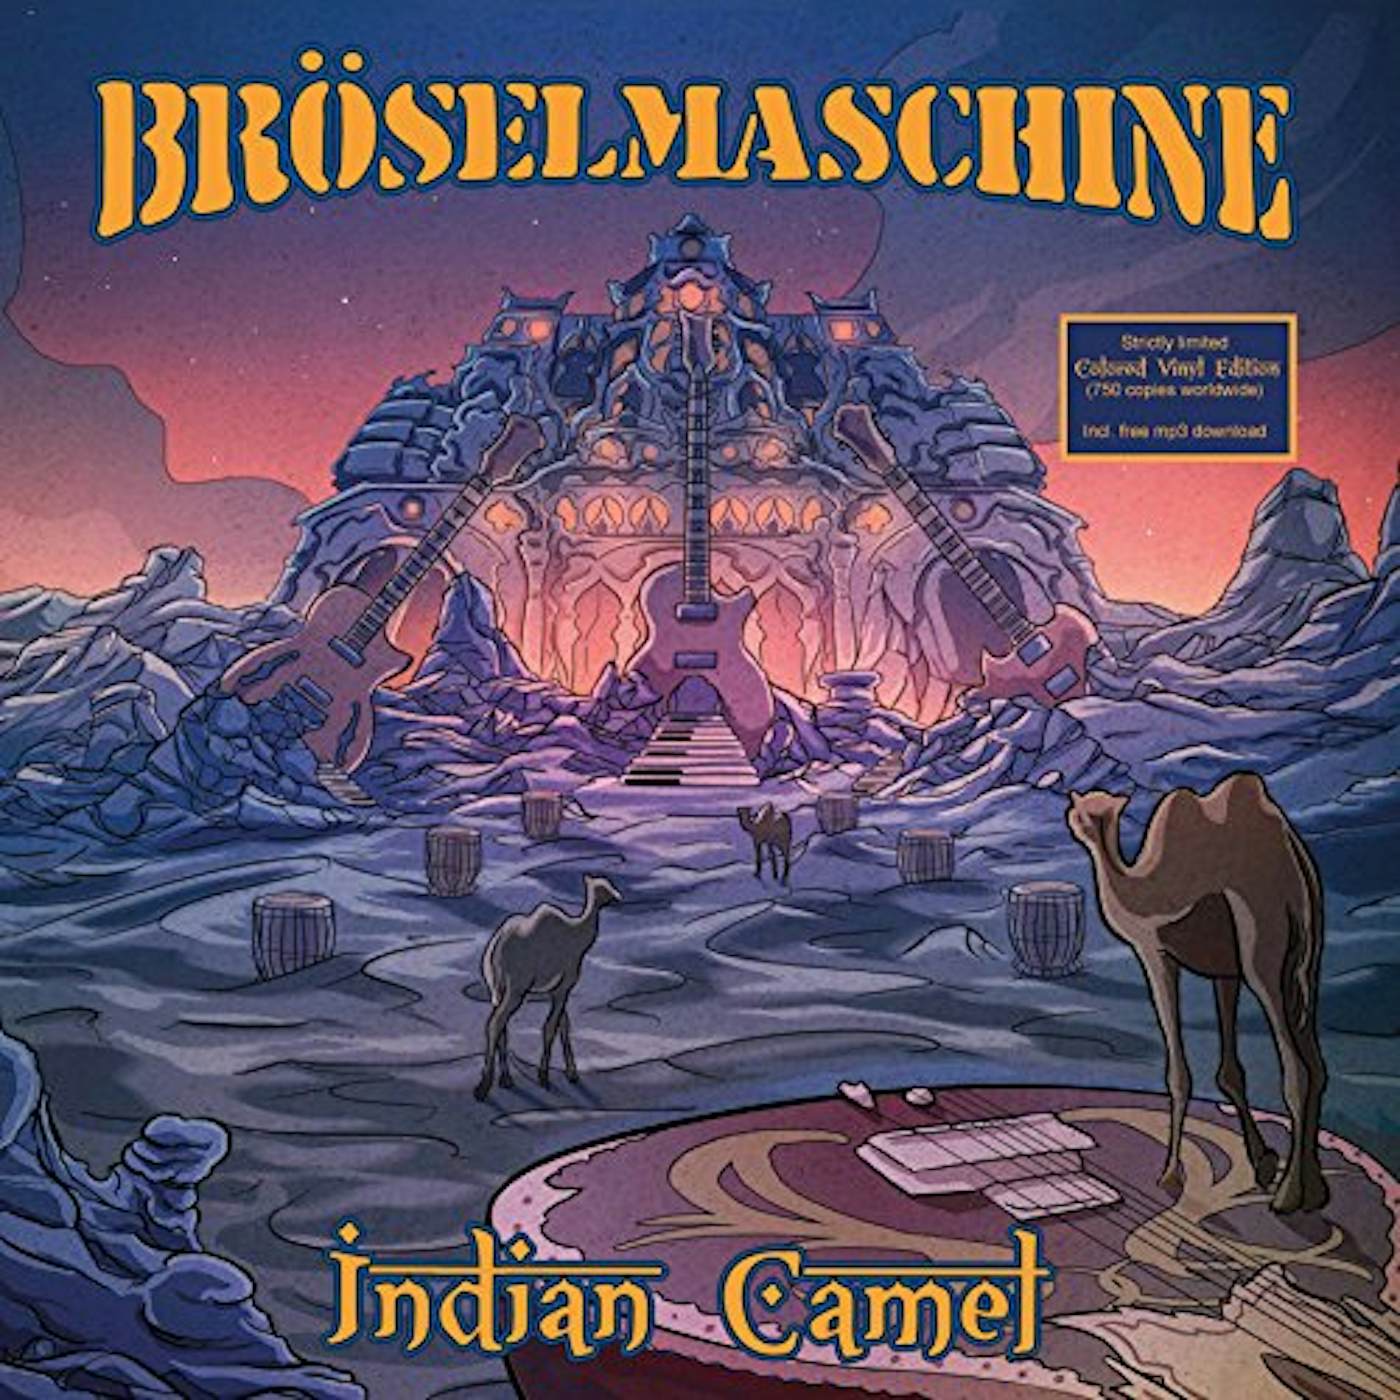 Broeselmaschine INDIAN CAMEL Vinyl Record